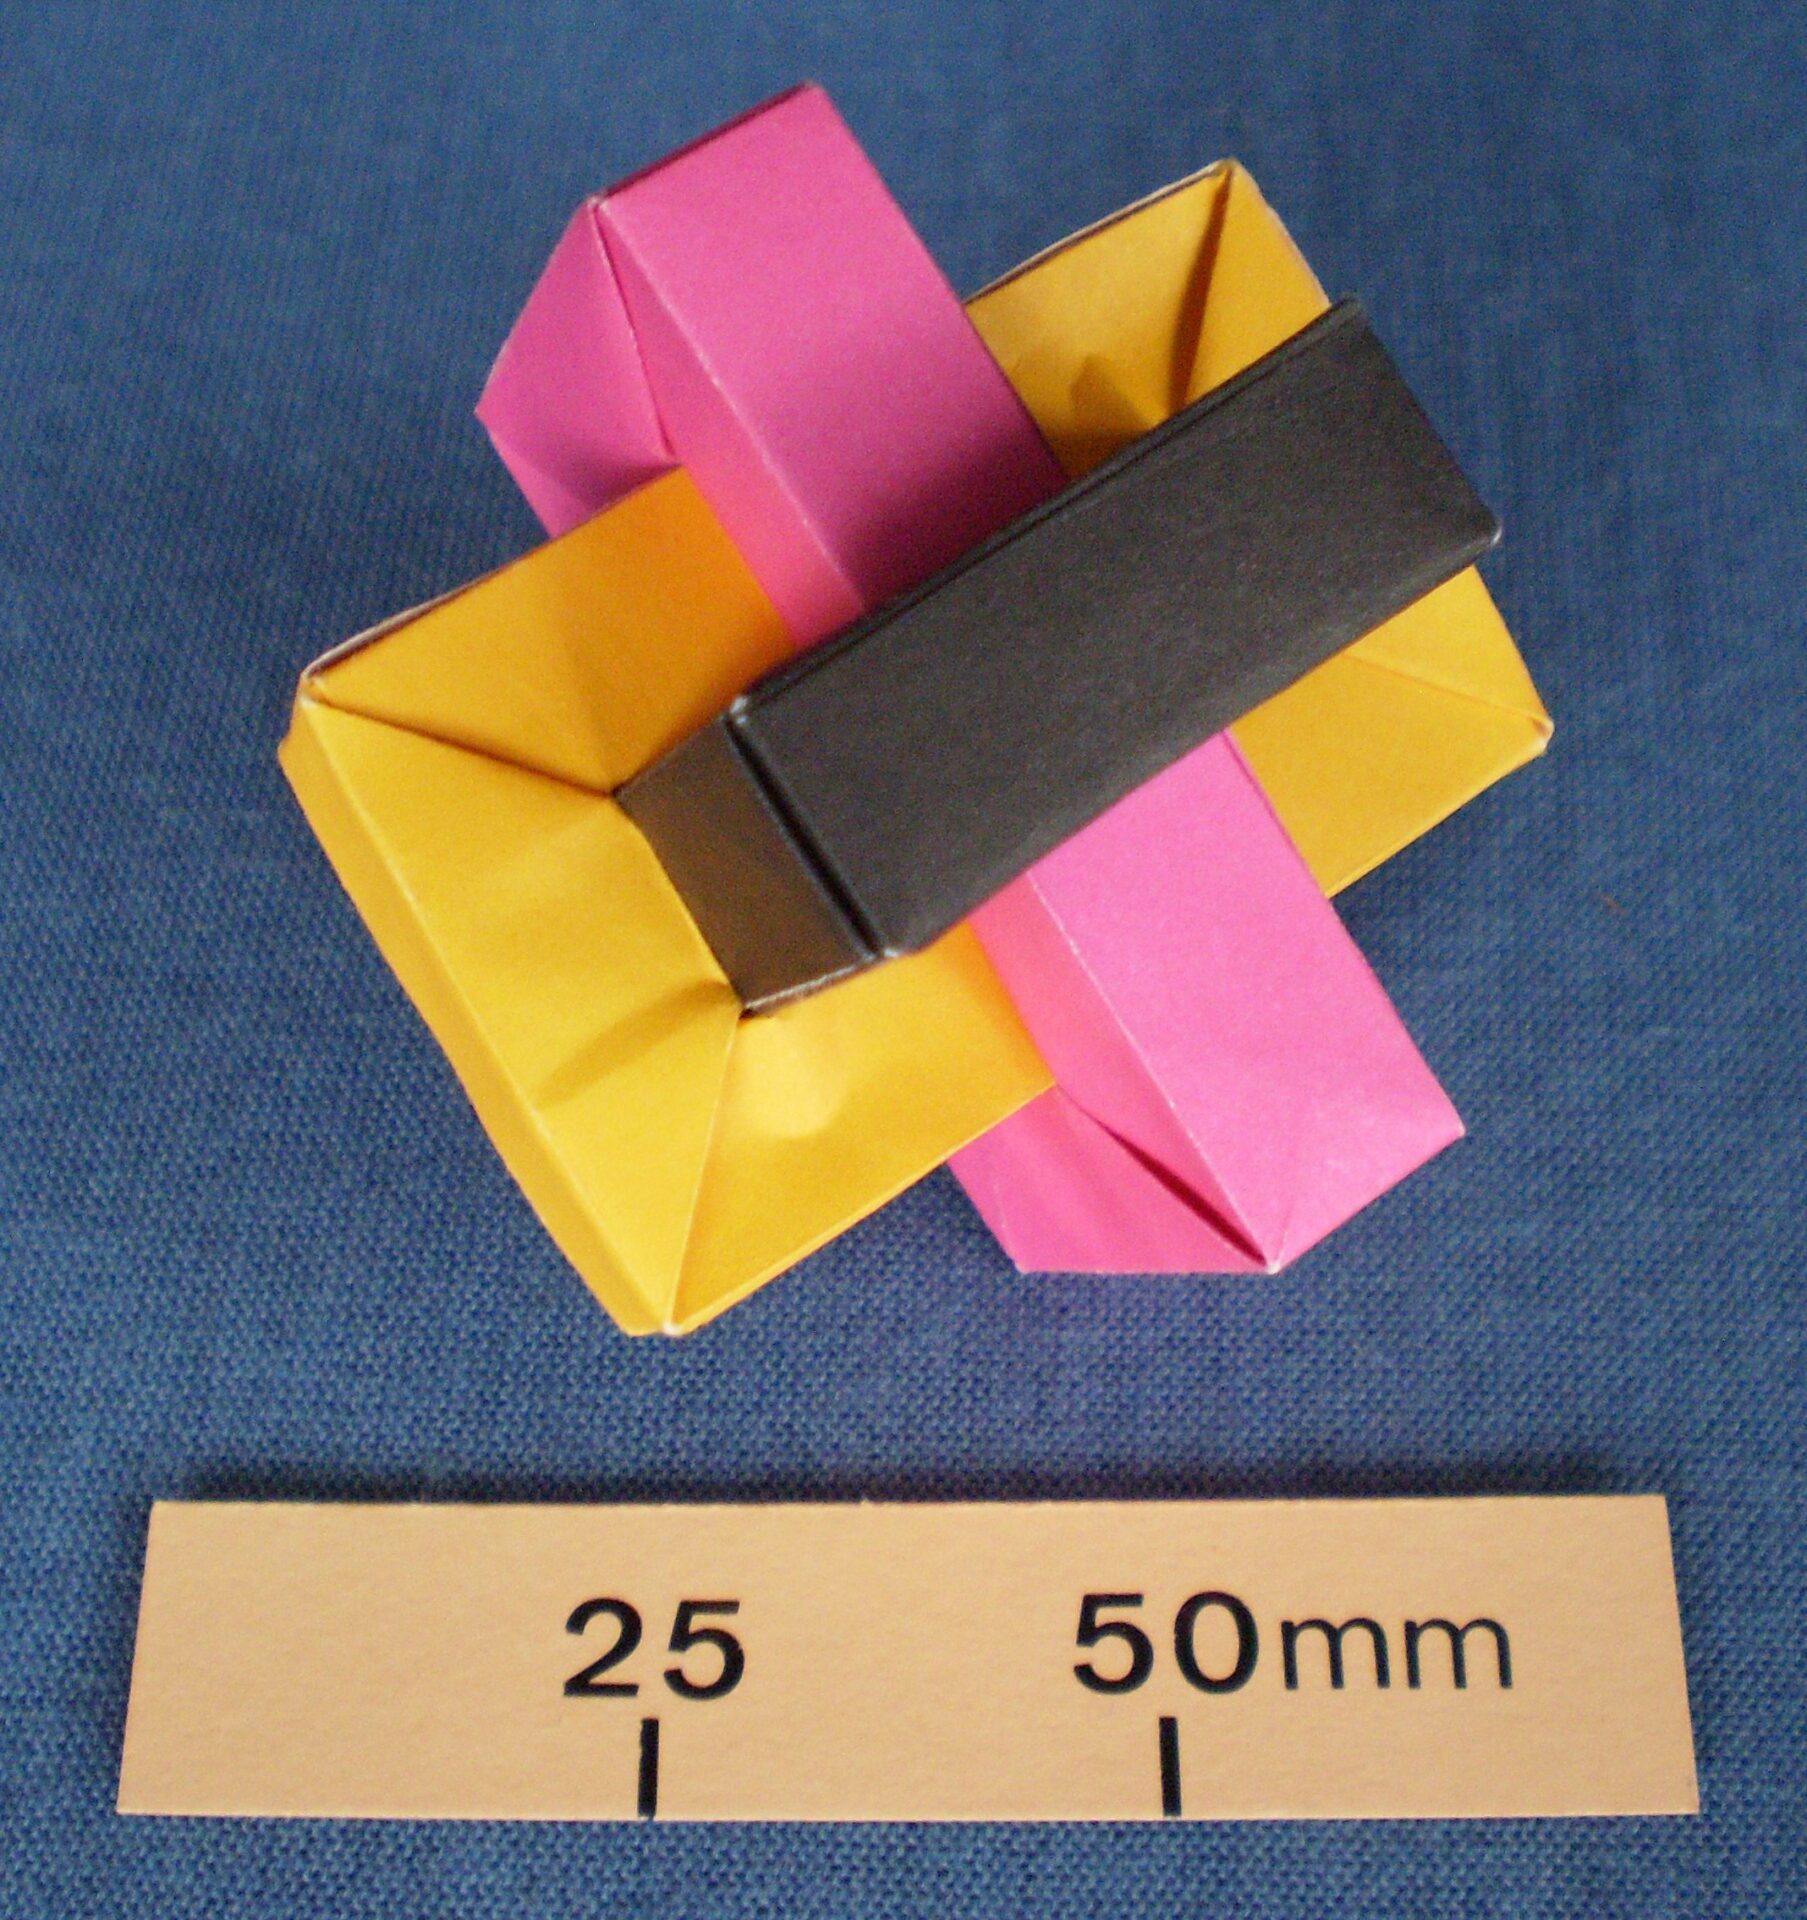 Origami ‘Umulius Rectangulum’ designed by Thoki Yenn